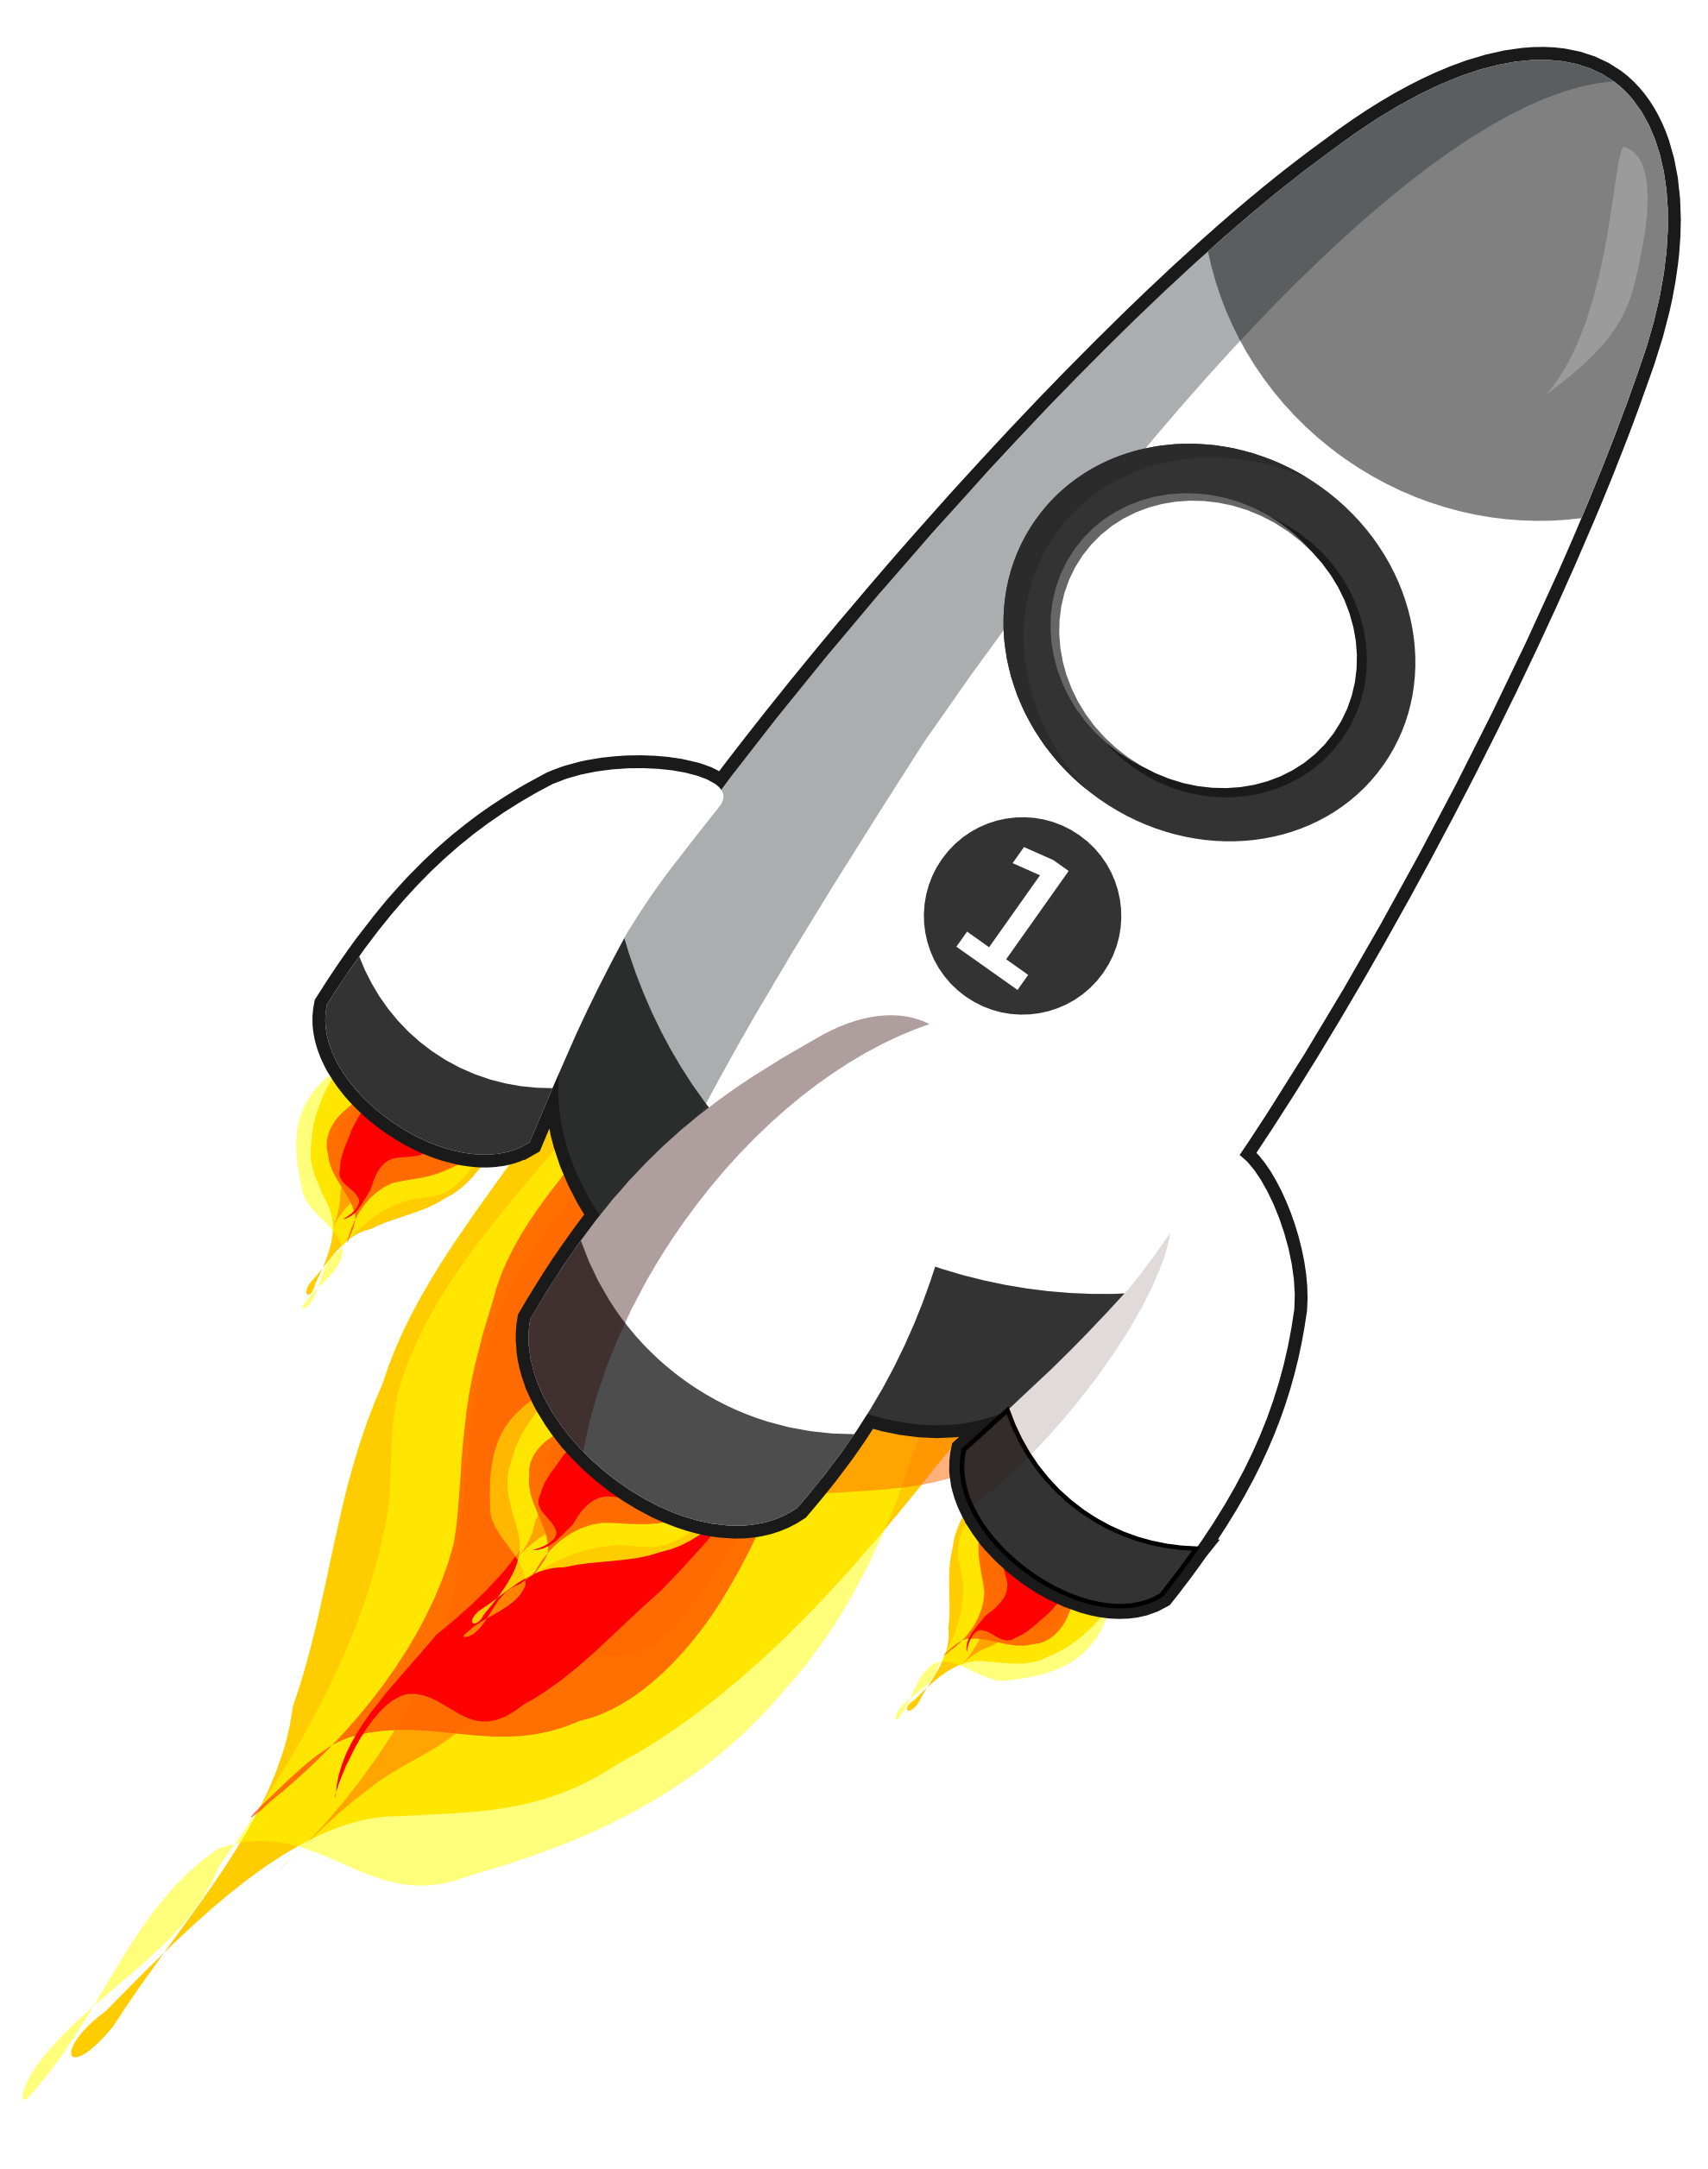 Pix For > Rocket Images Clip Art